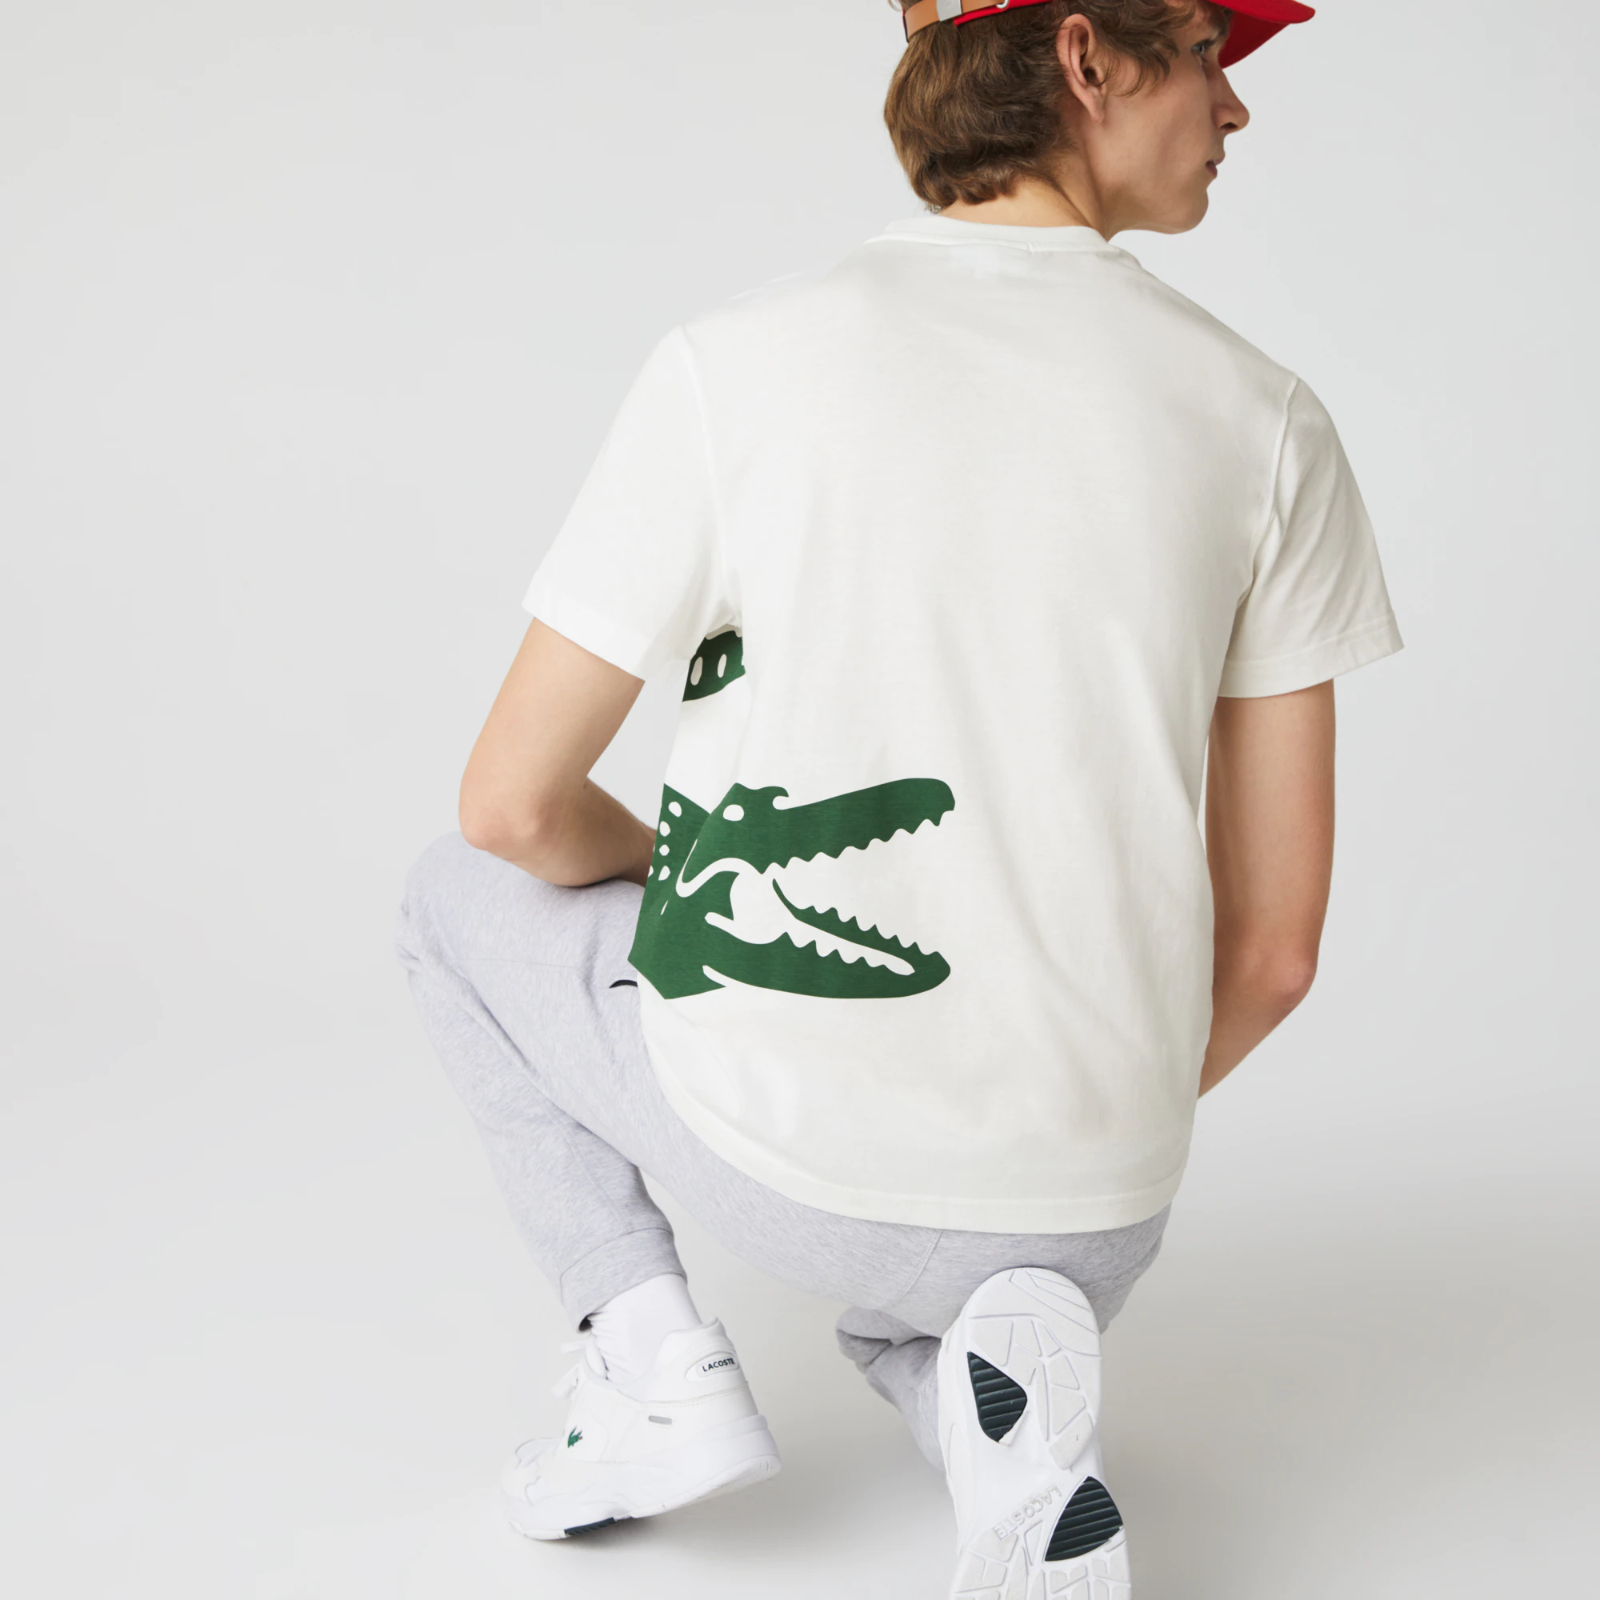 Men’s Oversize Croc Crew Neck Jersey T-shirt TH5139-51